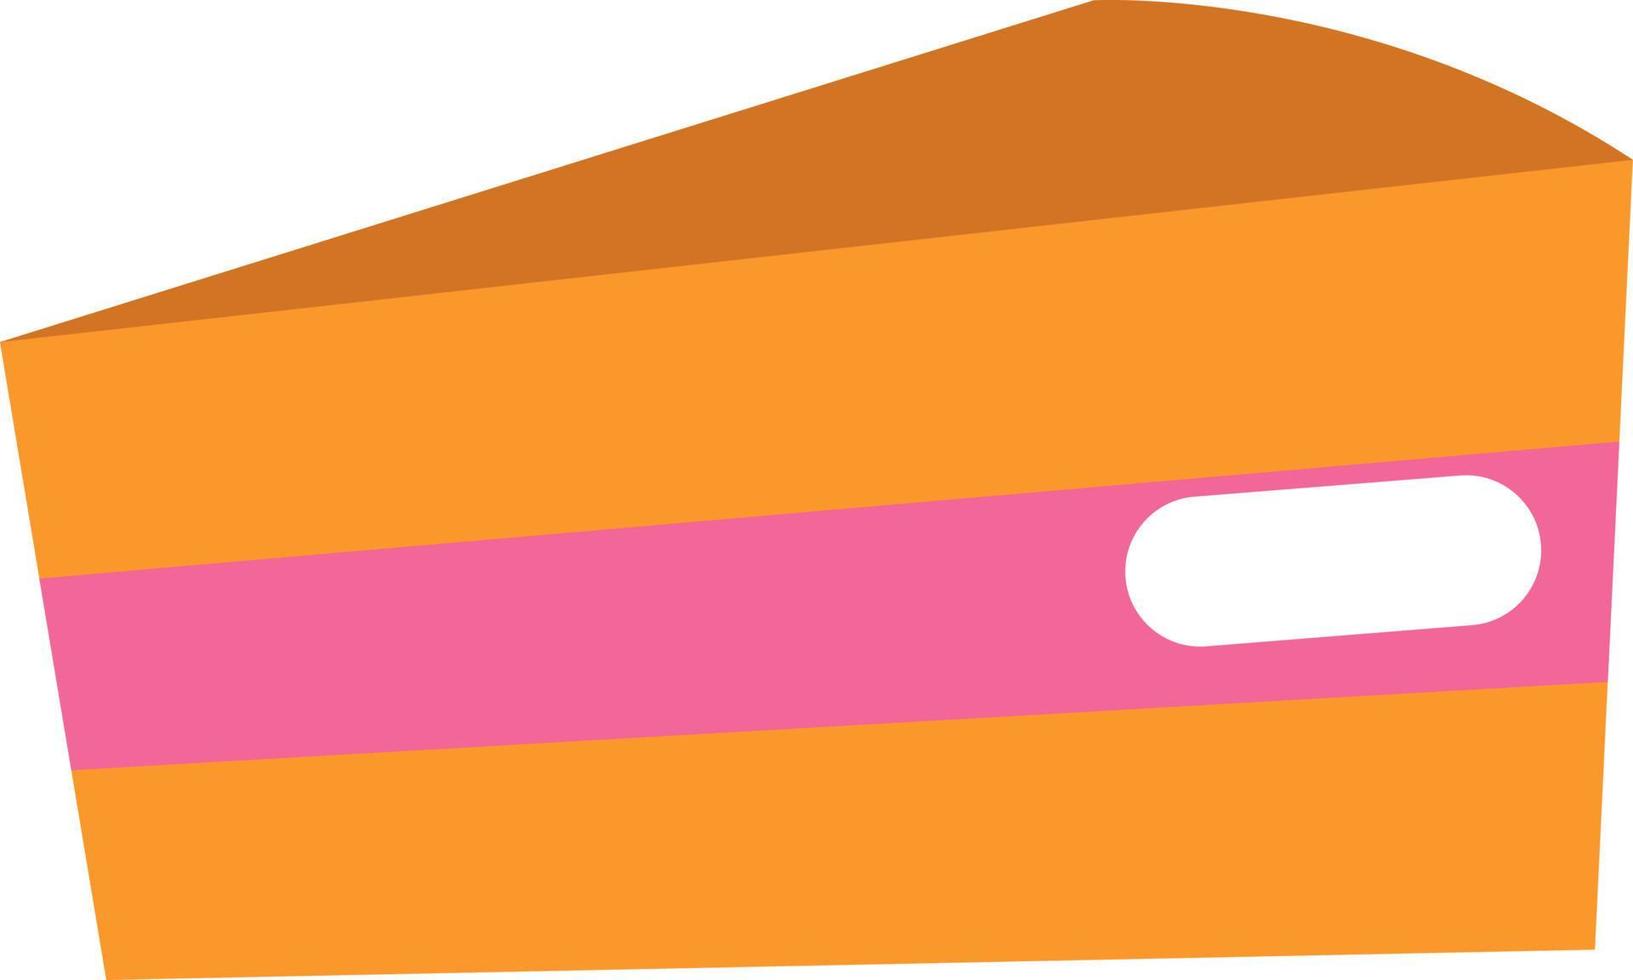 Slice of pink cake, illustration, vector on a white background.